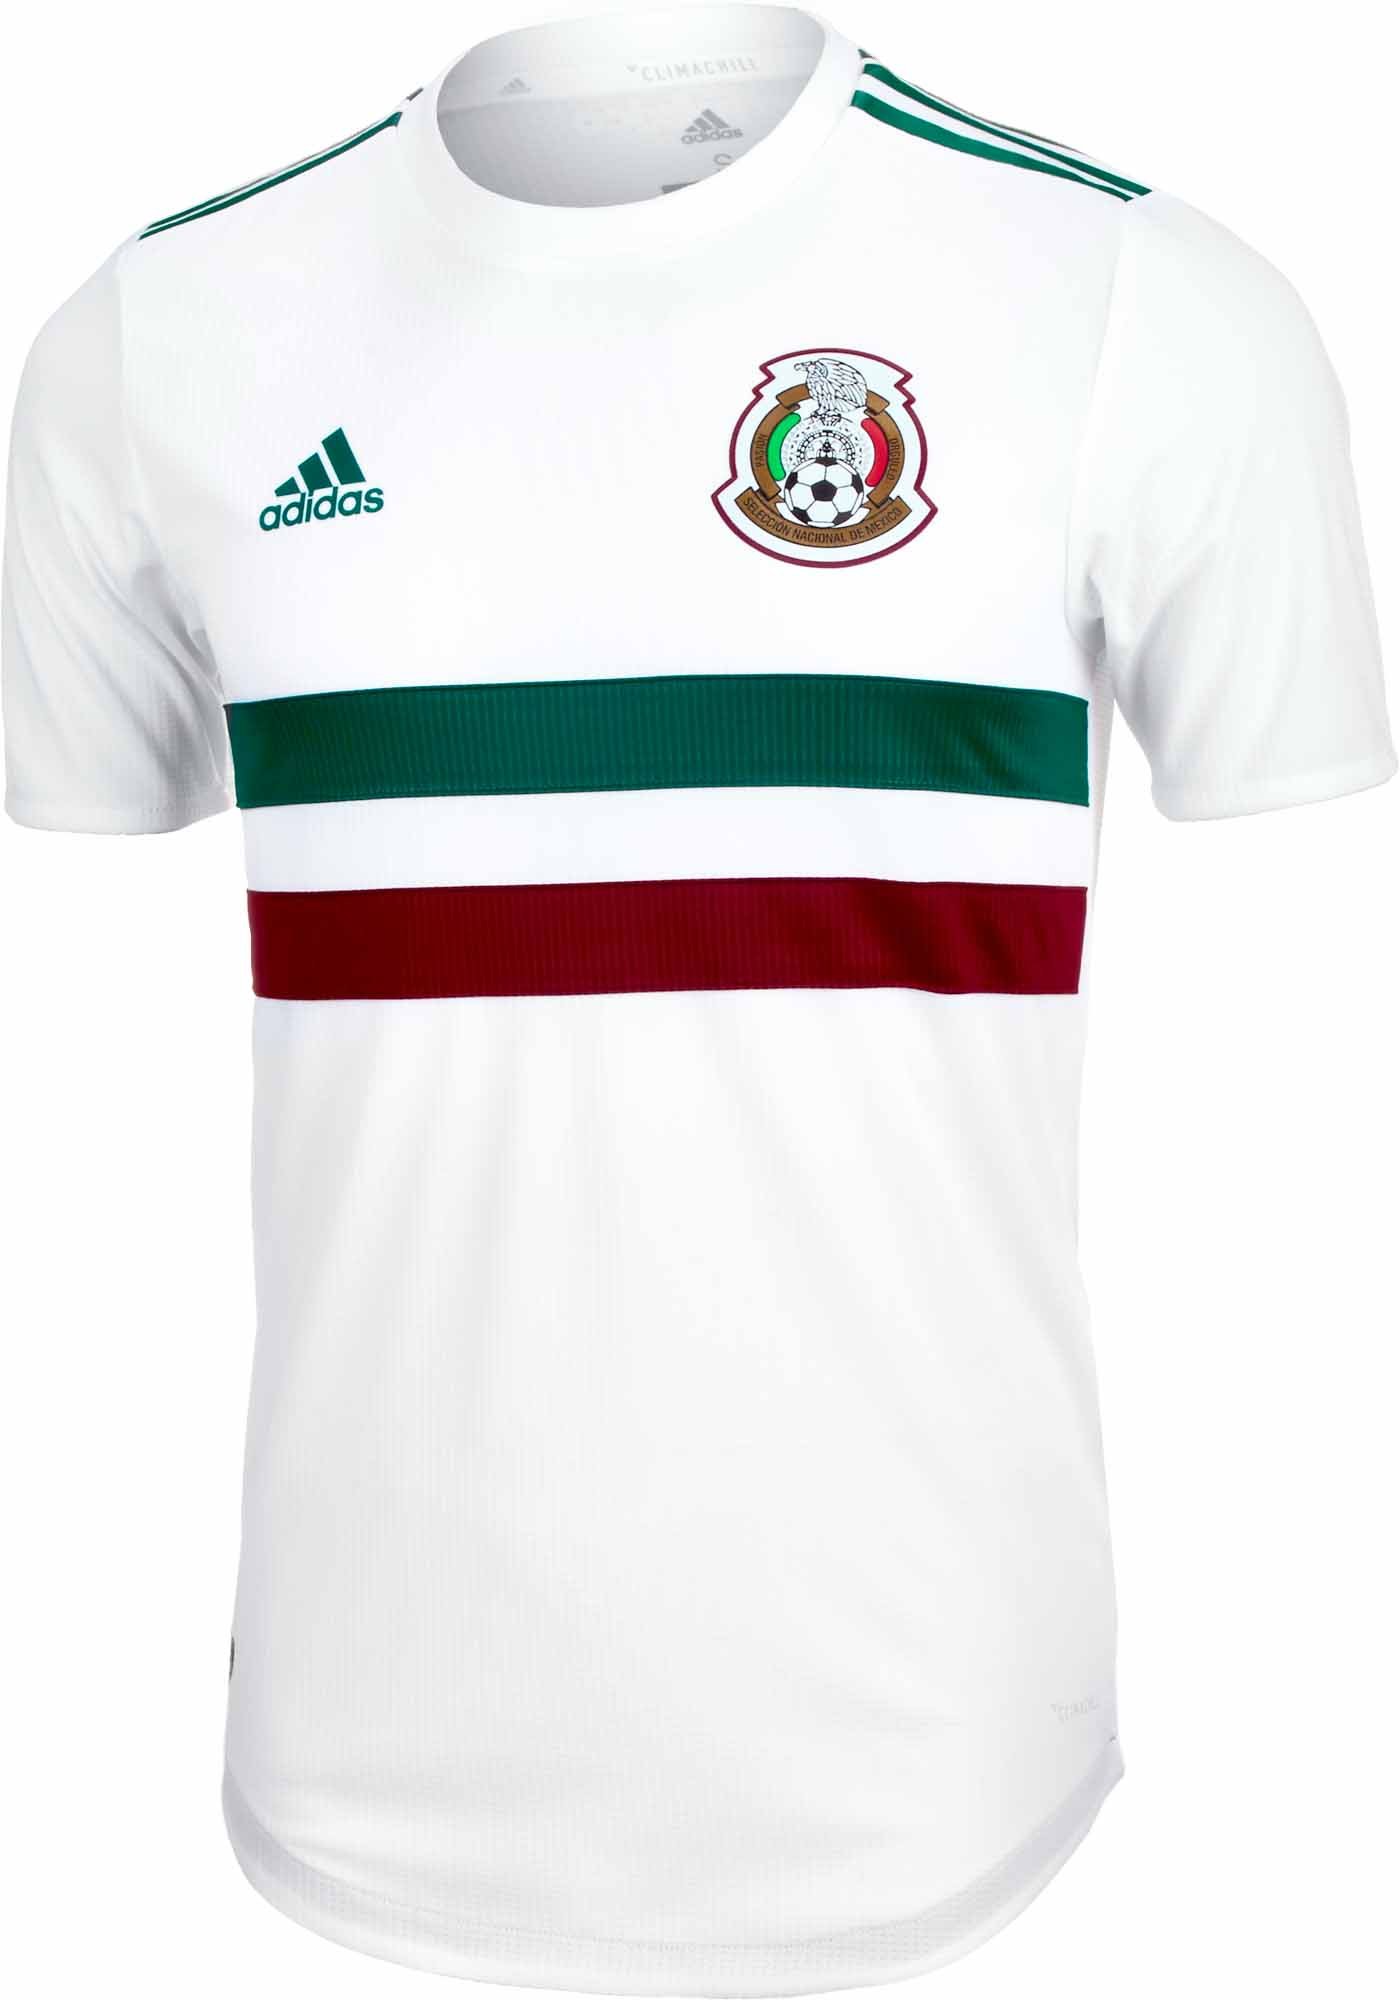 adidas mexico jersey customized